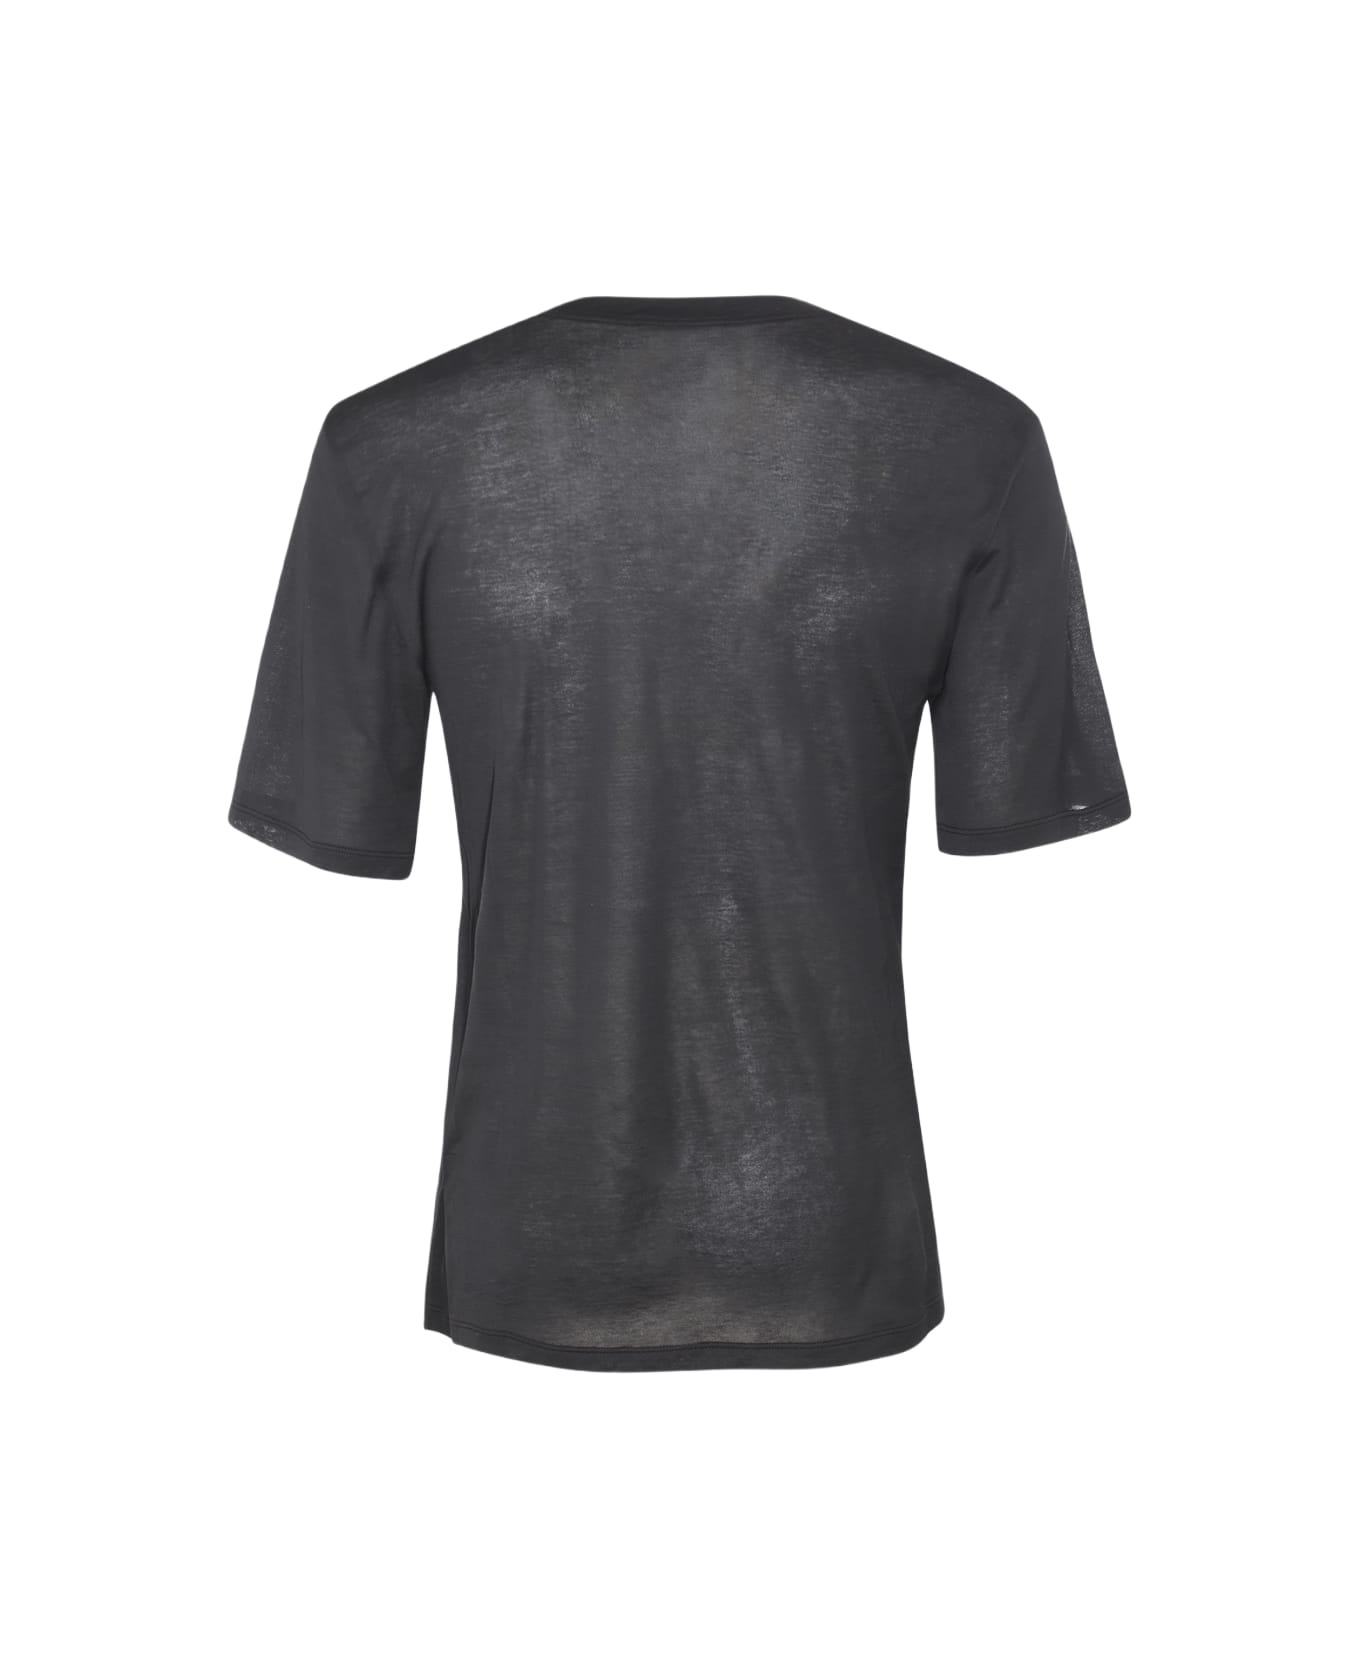 Laneus Black Cotton T-shirt シャツ